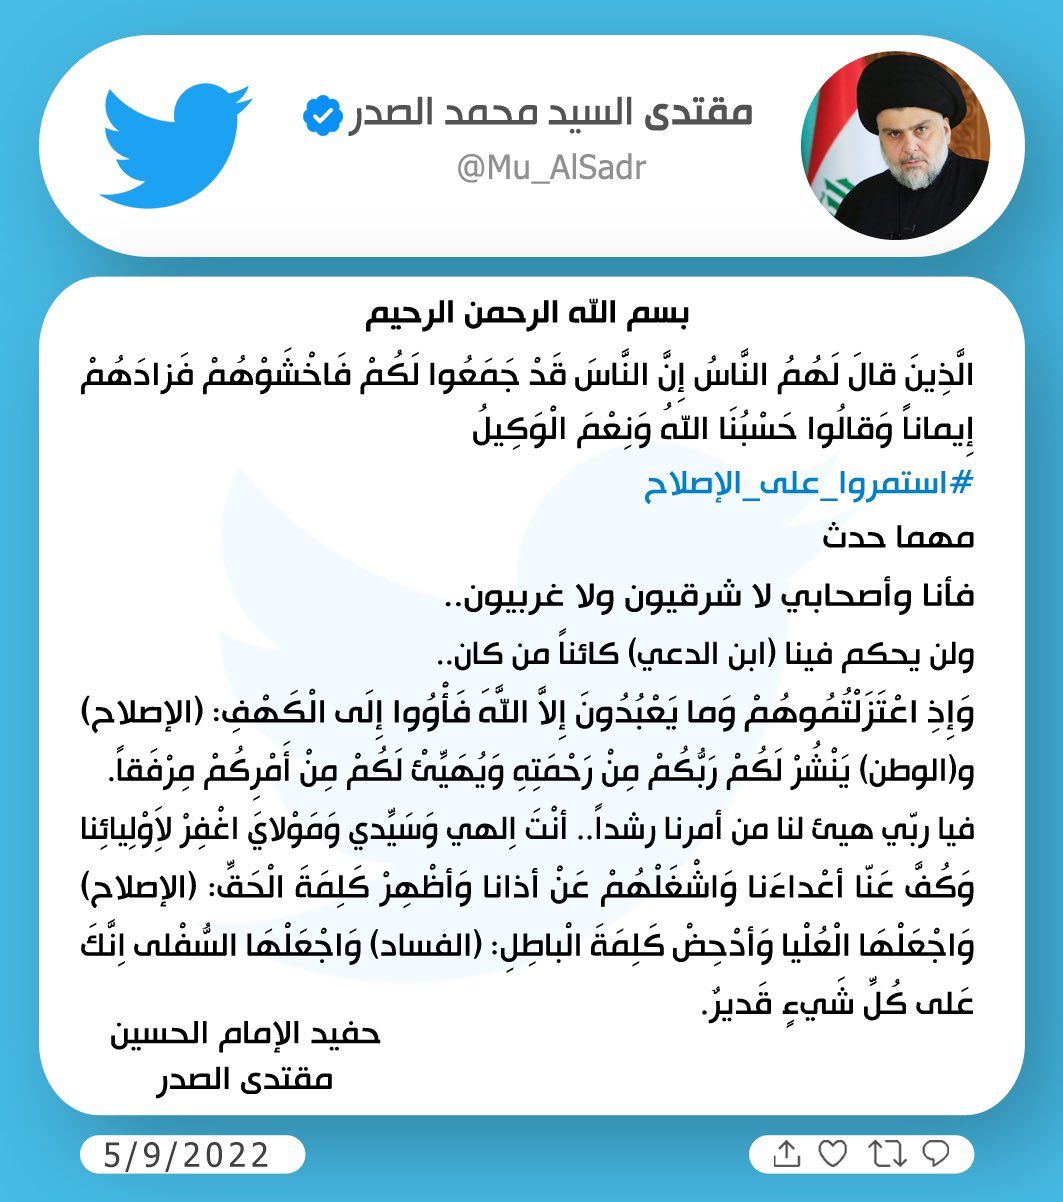 Muqtada al-Sadr: "Ibn al-Day'i" will not rule over us